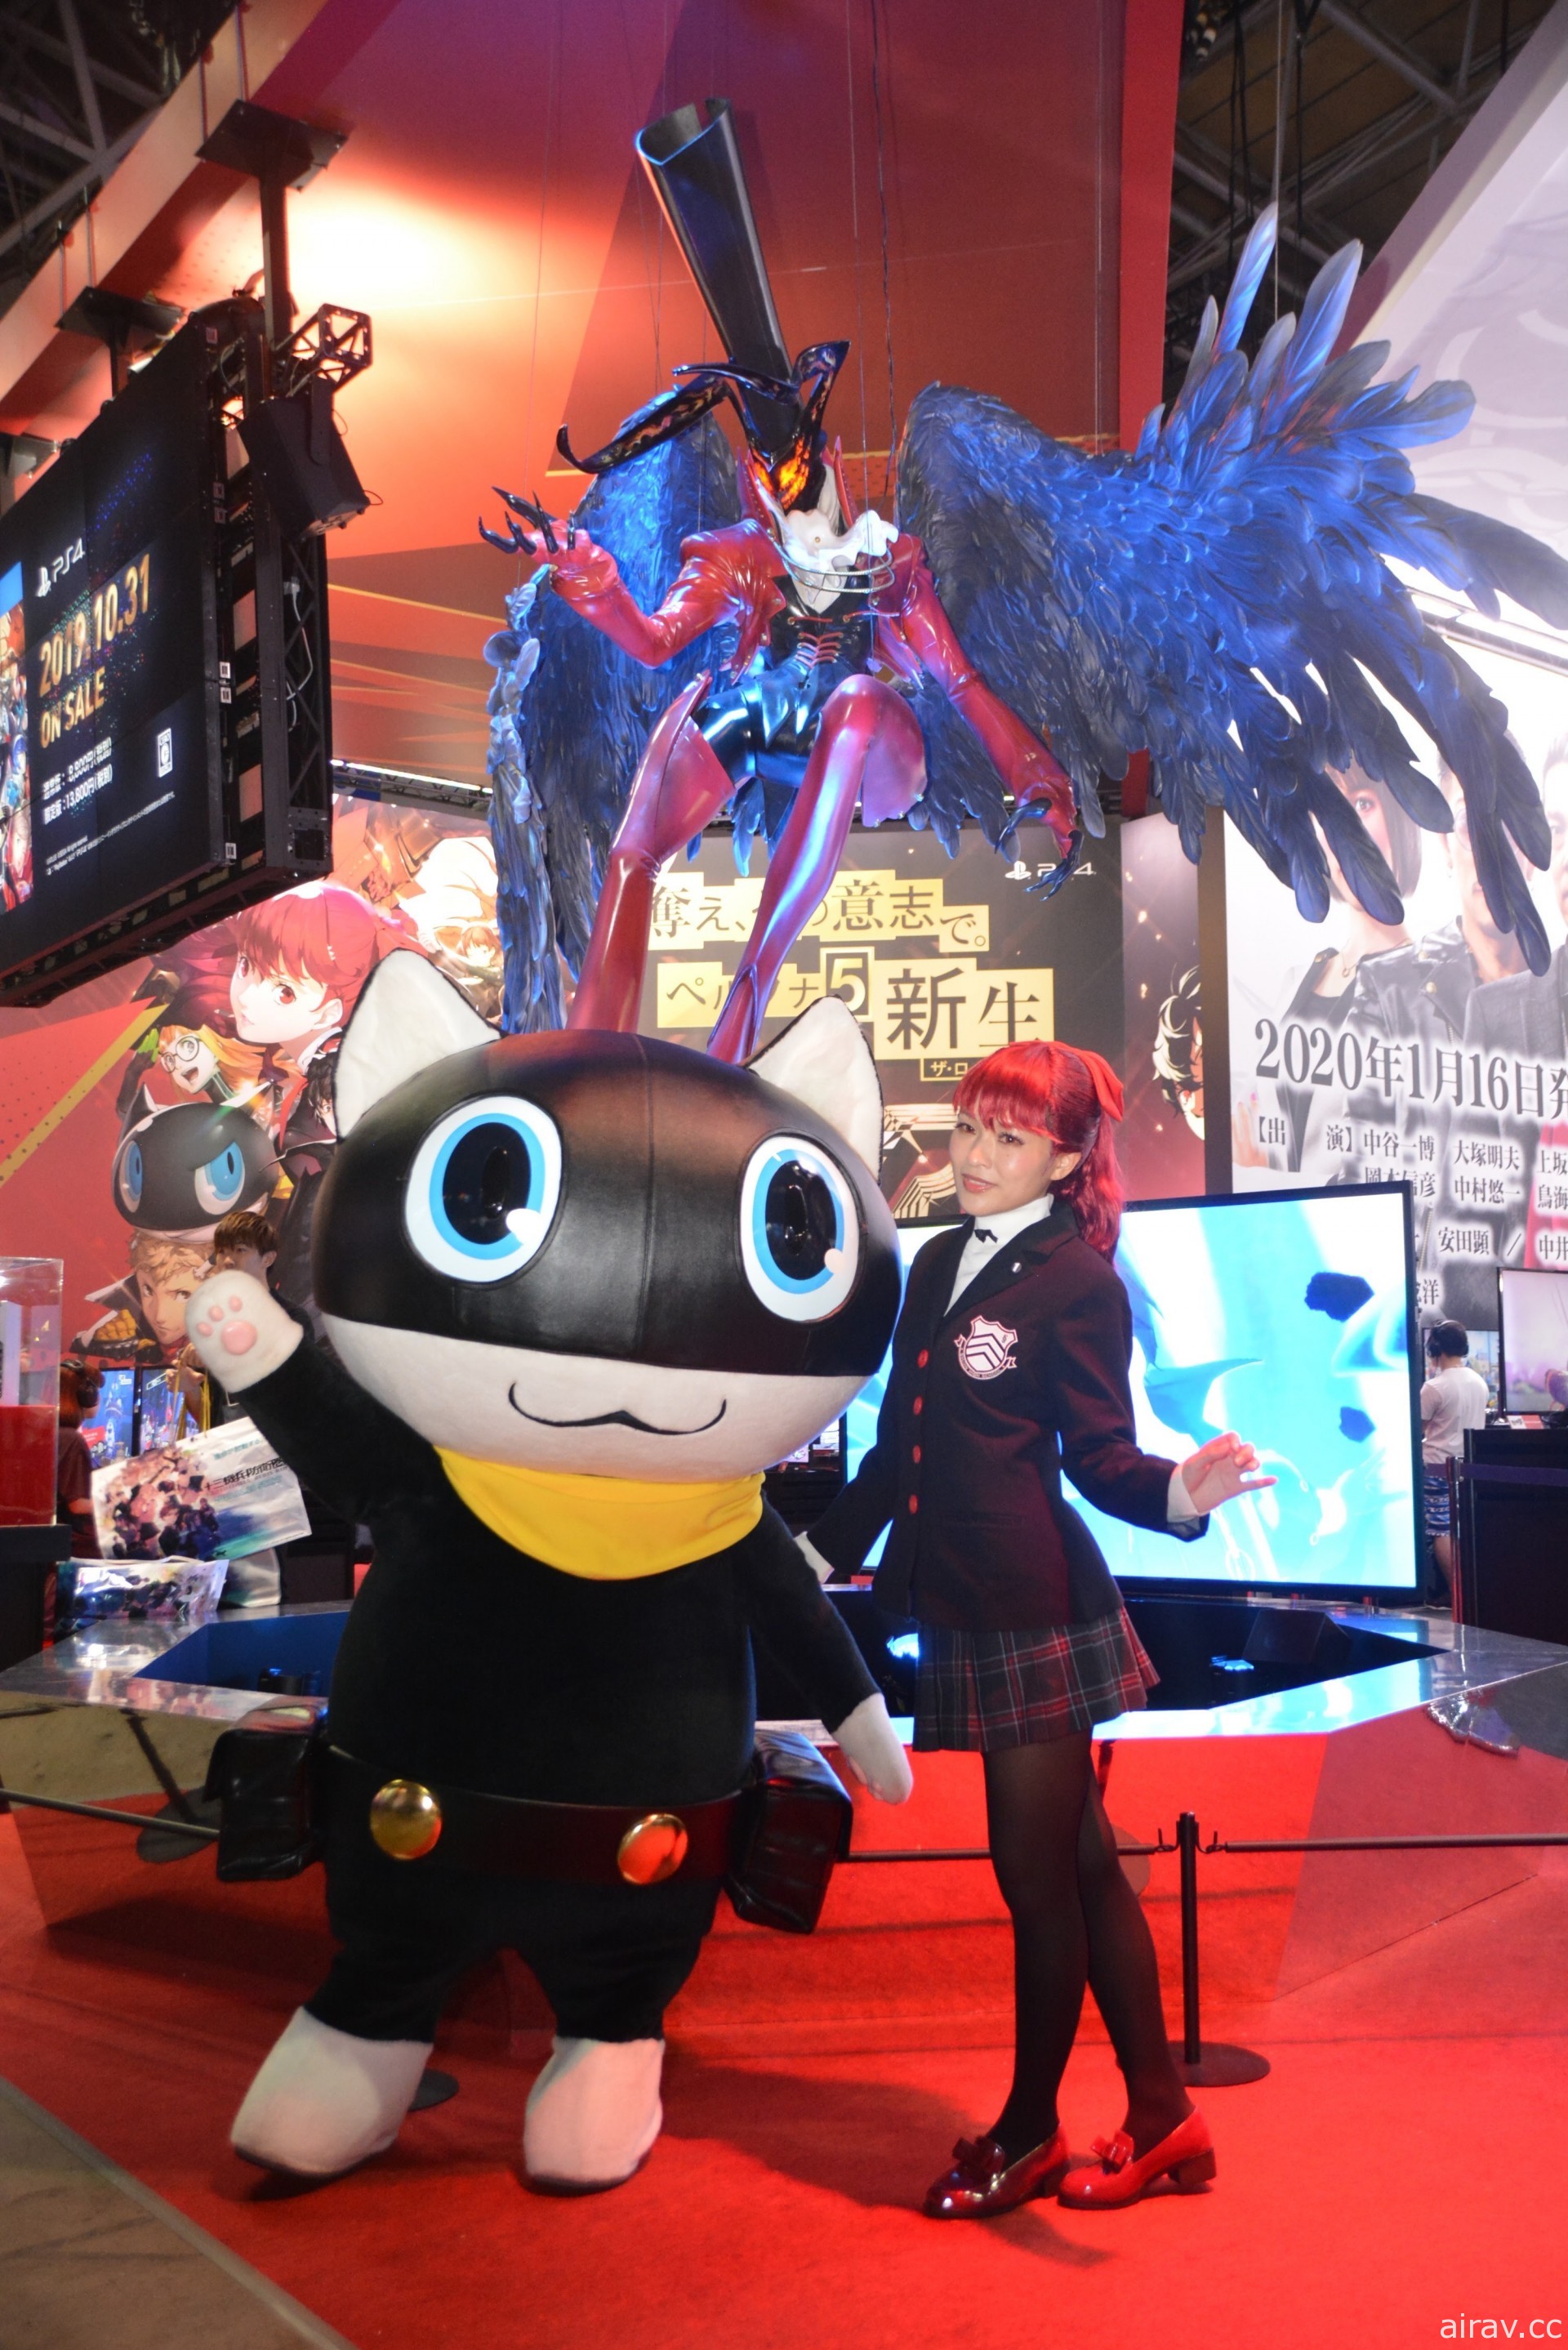 【TGS 20】SEGA・ATLUS 公开东京电玩展特设网站 抢先举办线上 Cosplay 比赛